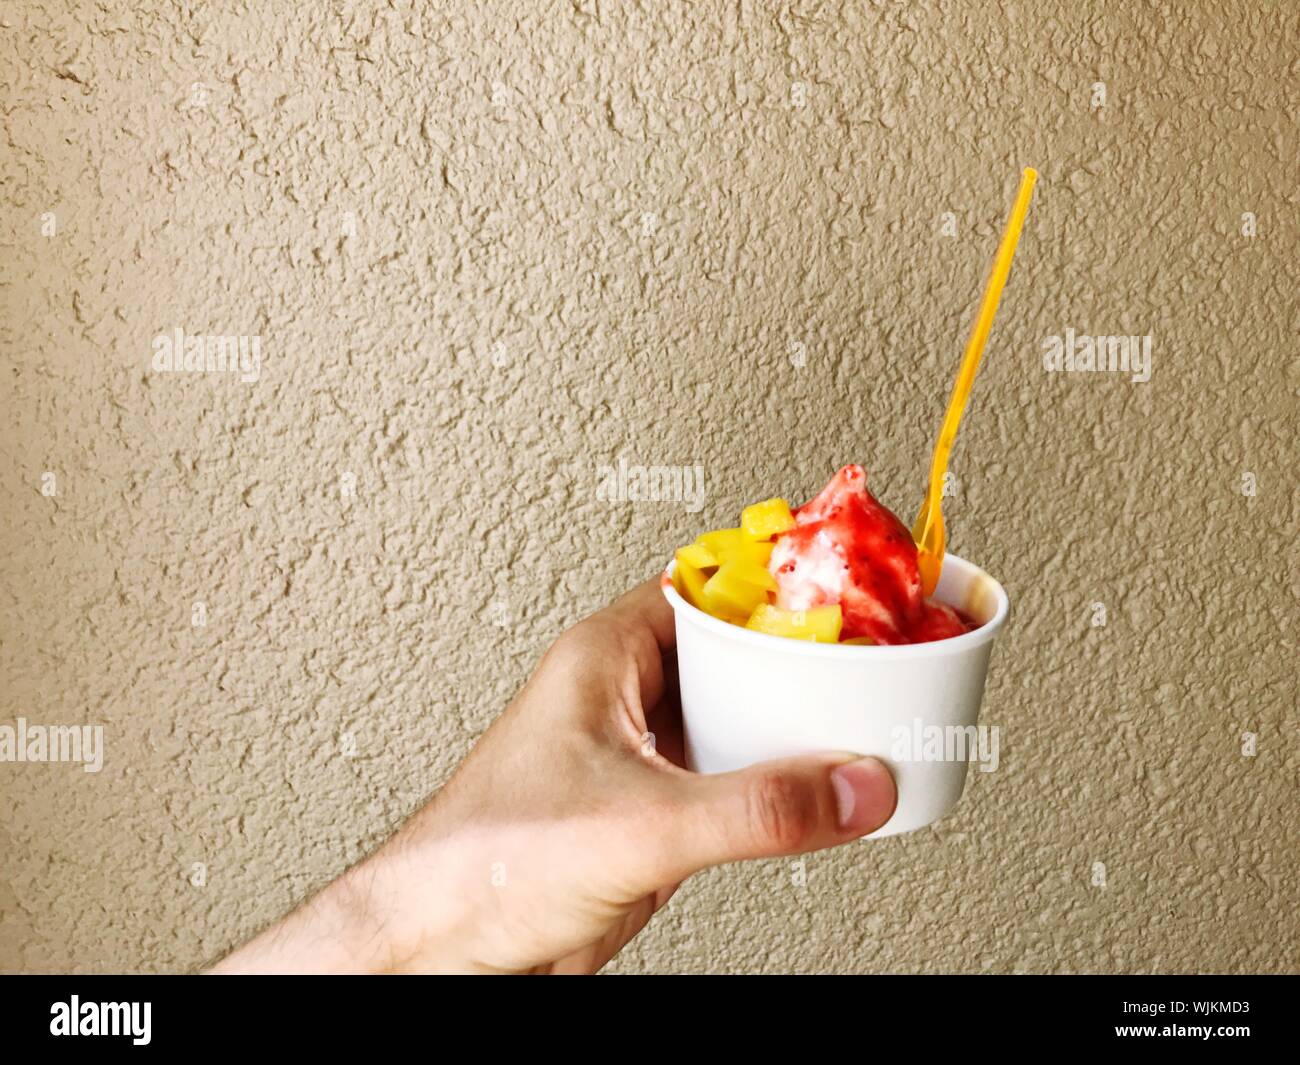 Walls yogurt ice cream